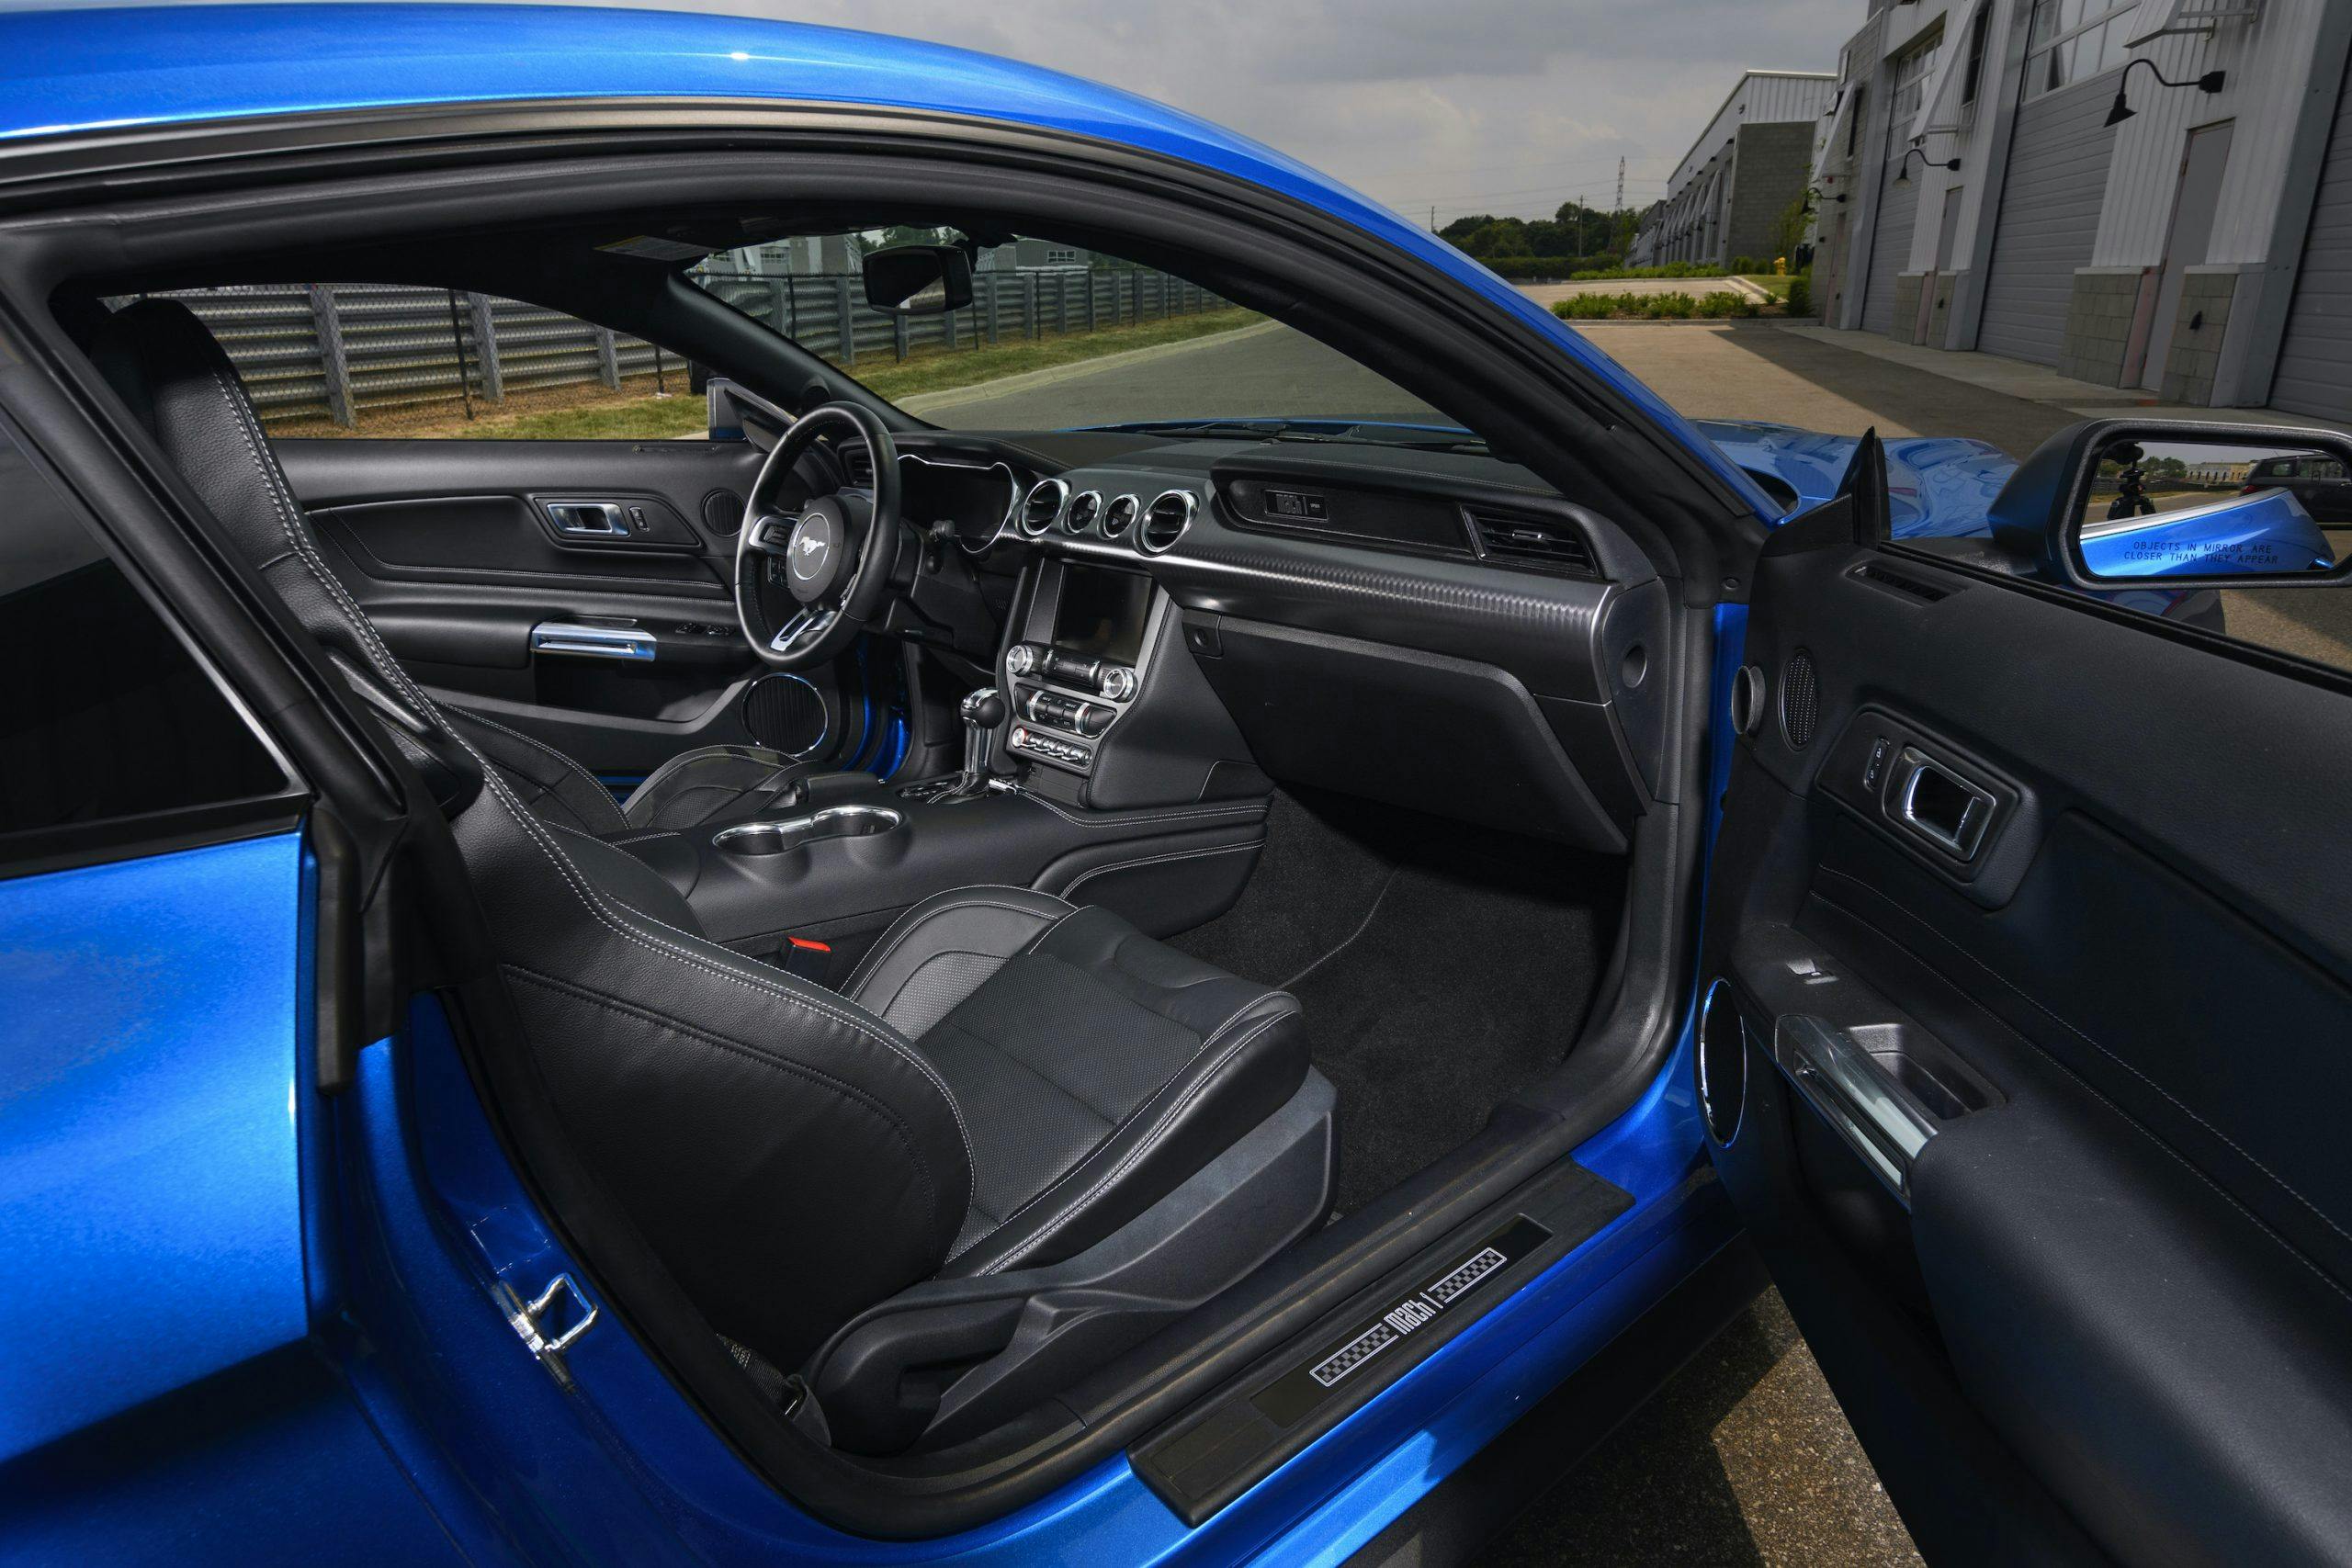 2021 Ford Mustang Mach 1 inside interior